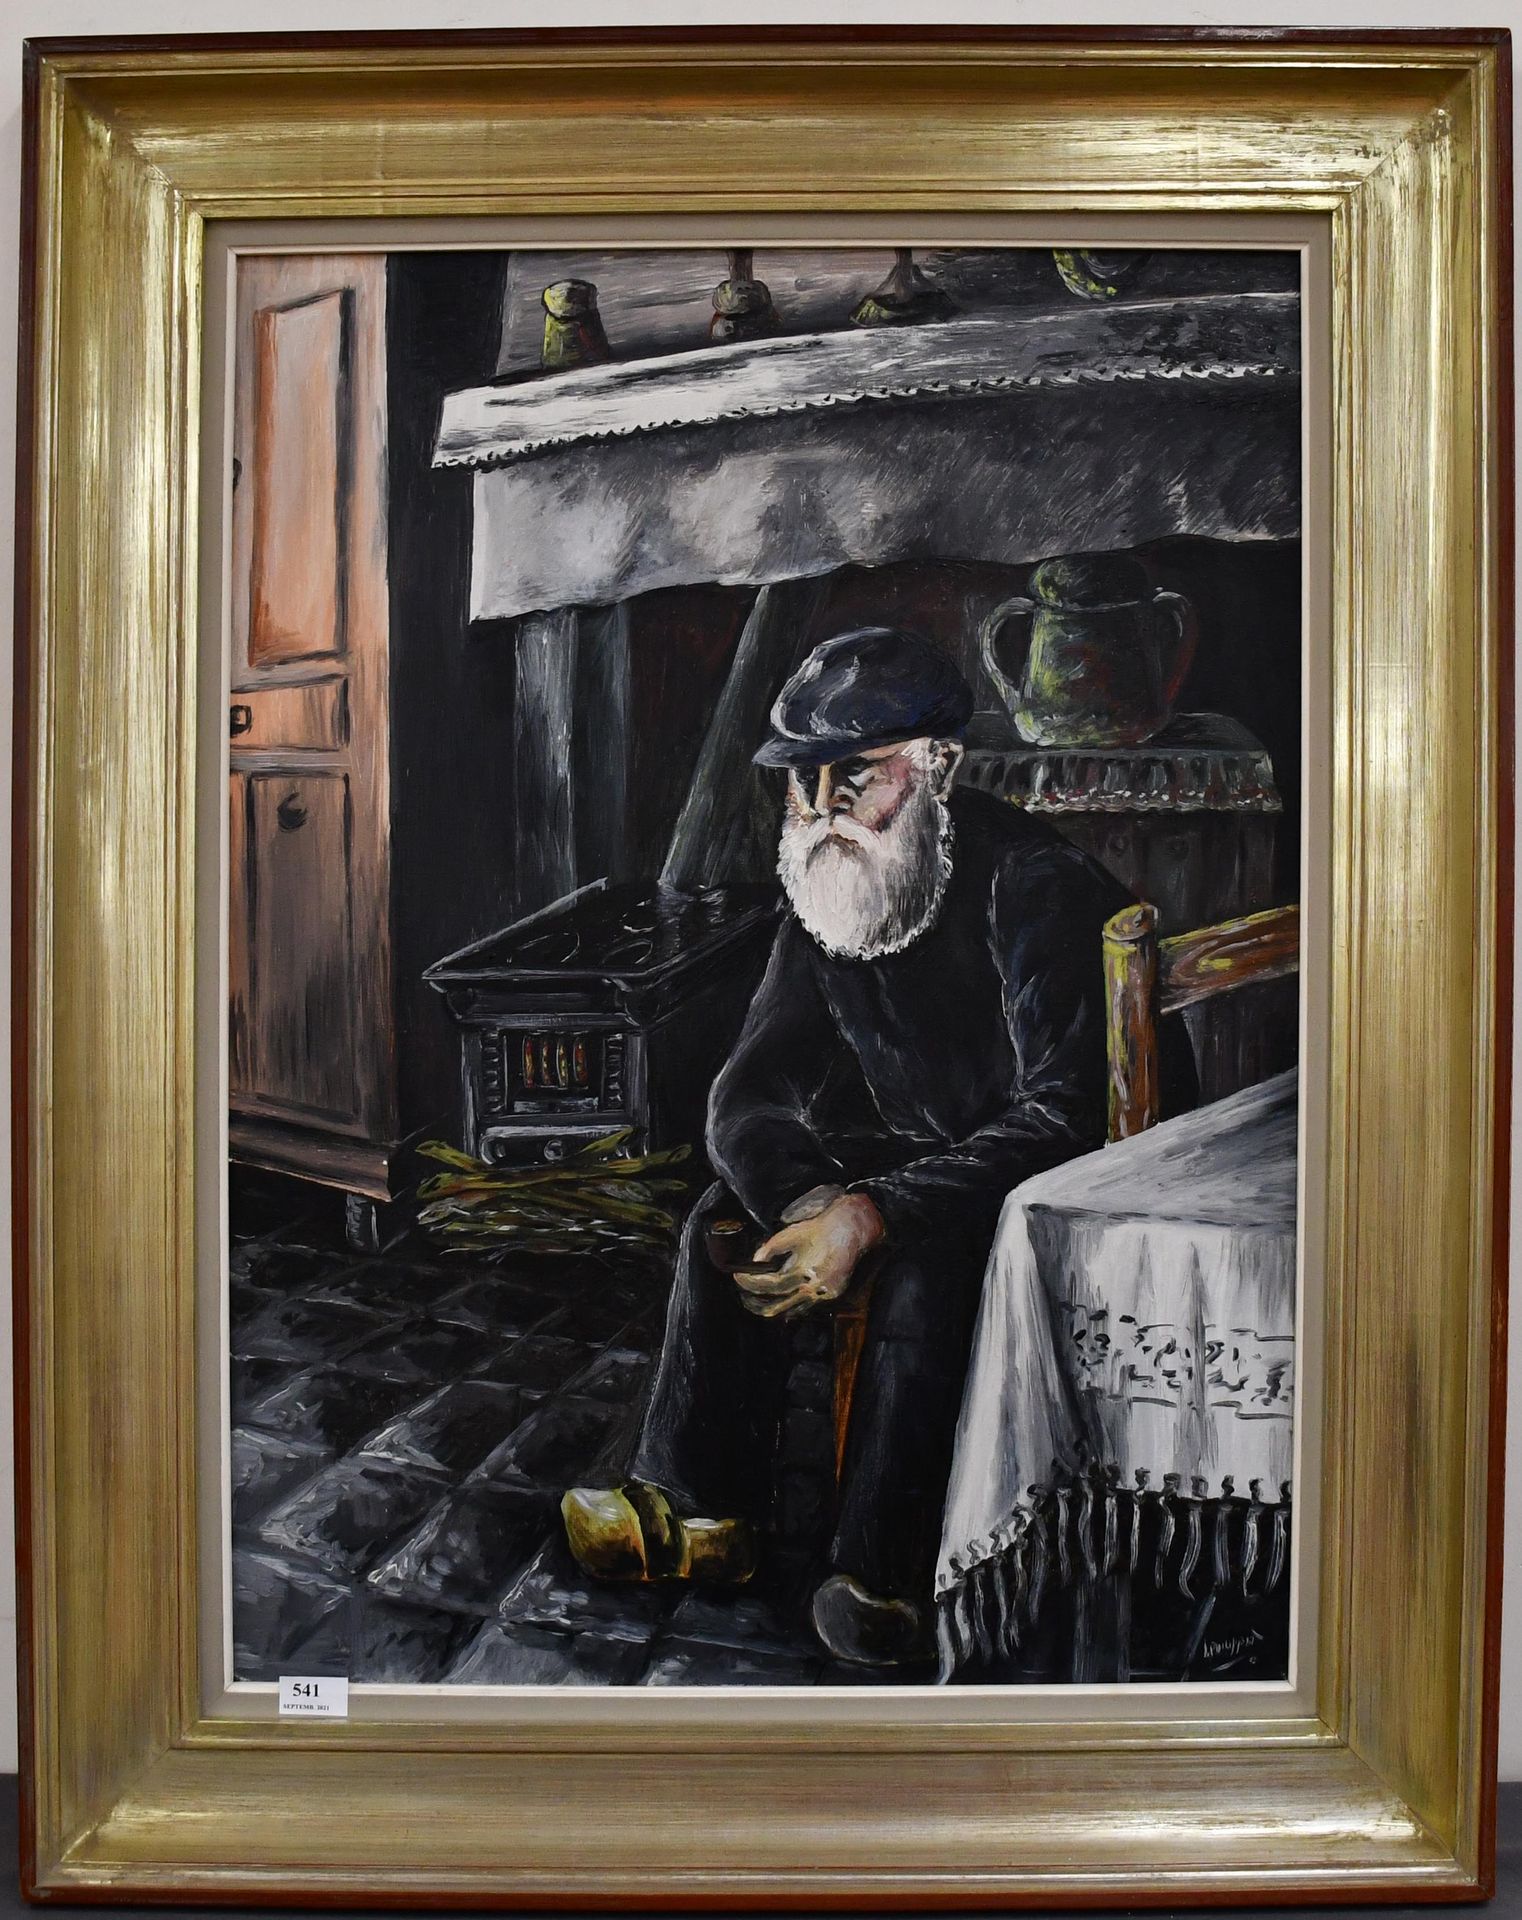 Null Philippet

Óleo sobre lienzo: "Viejo frente al hogar". Firmado. Dimensiones&hellip;